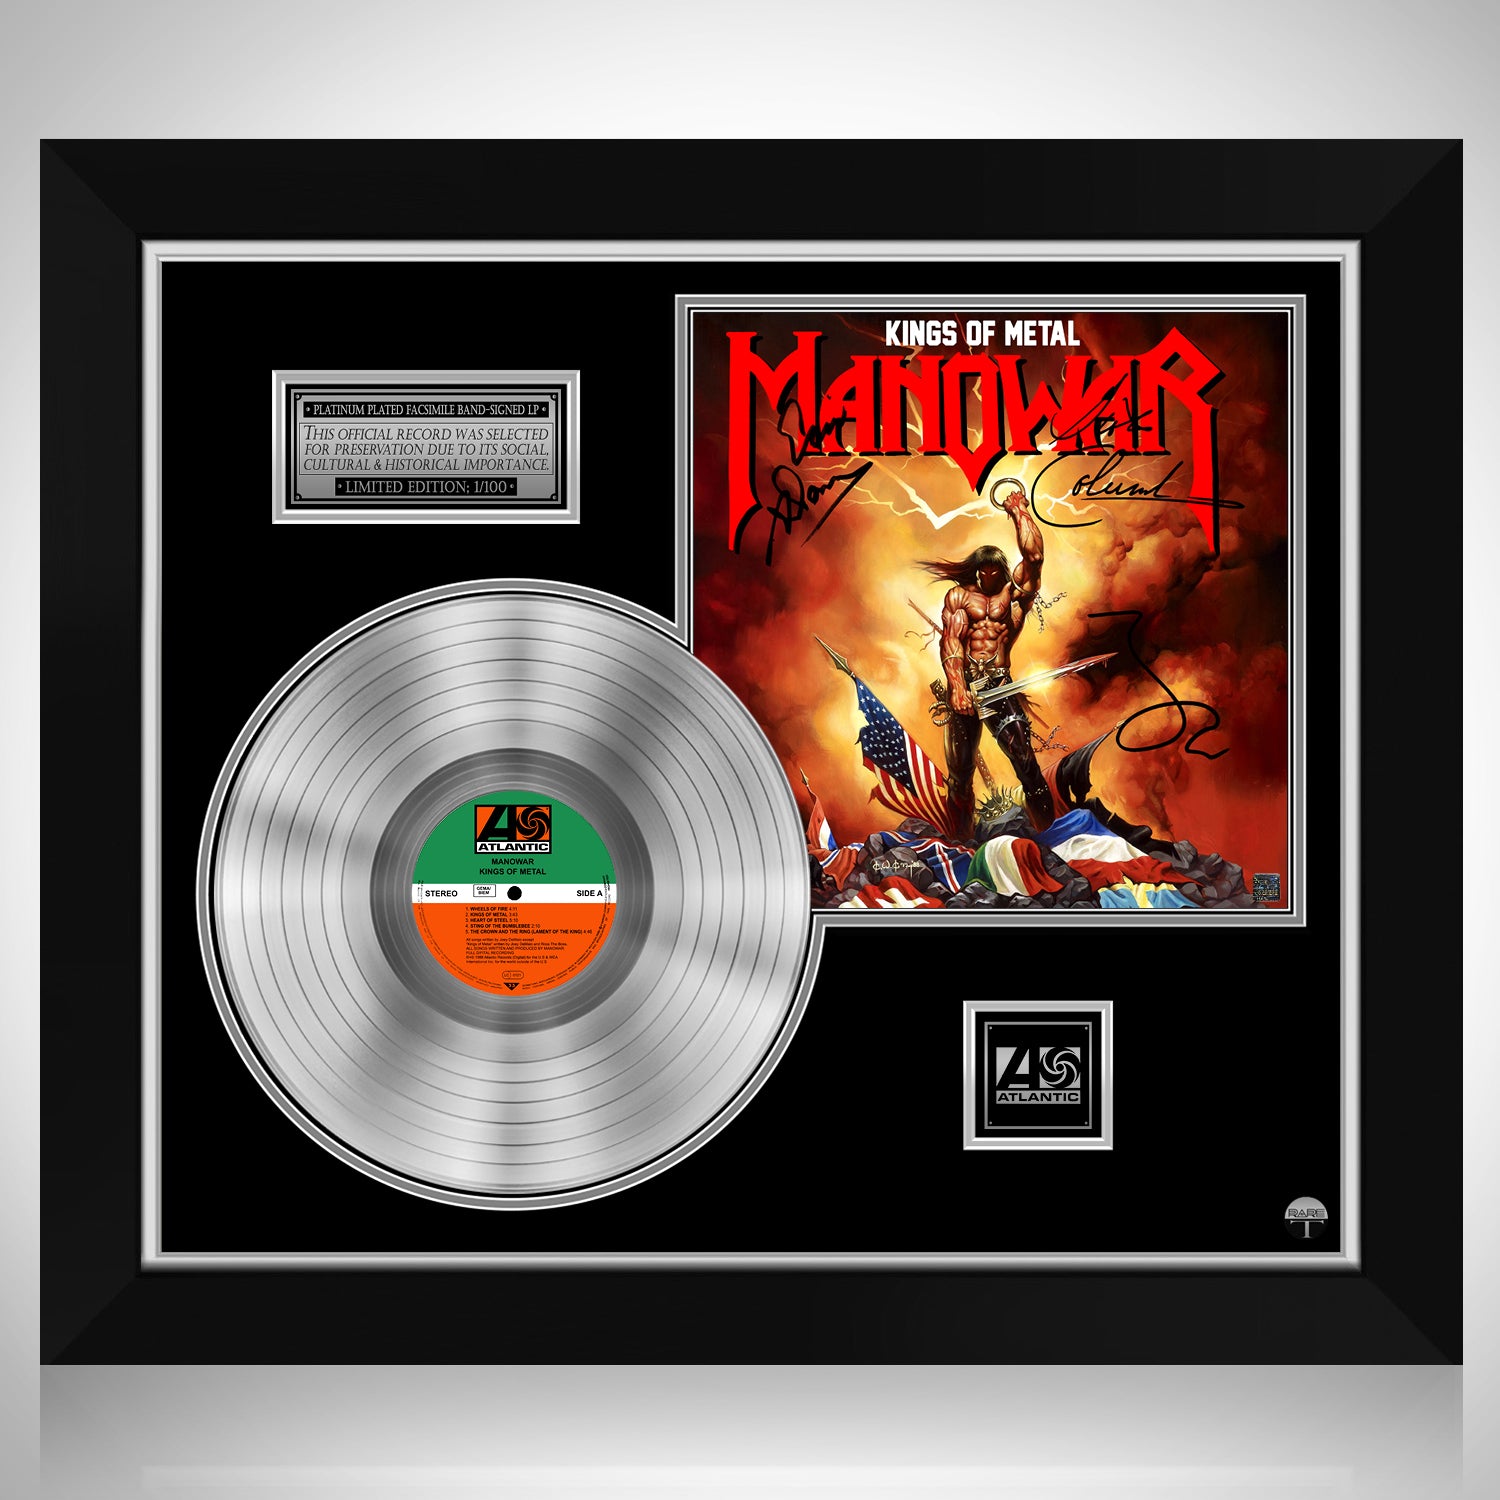 Manowar - Kings of Metal Platinum LP Limited Signature Edition 